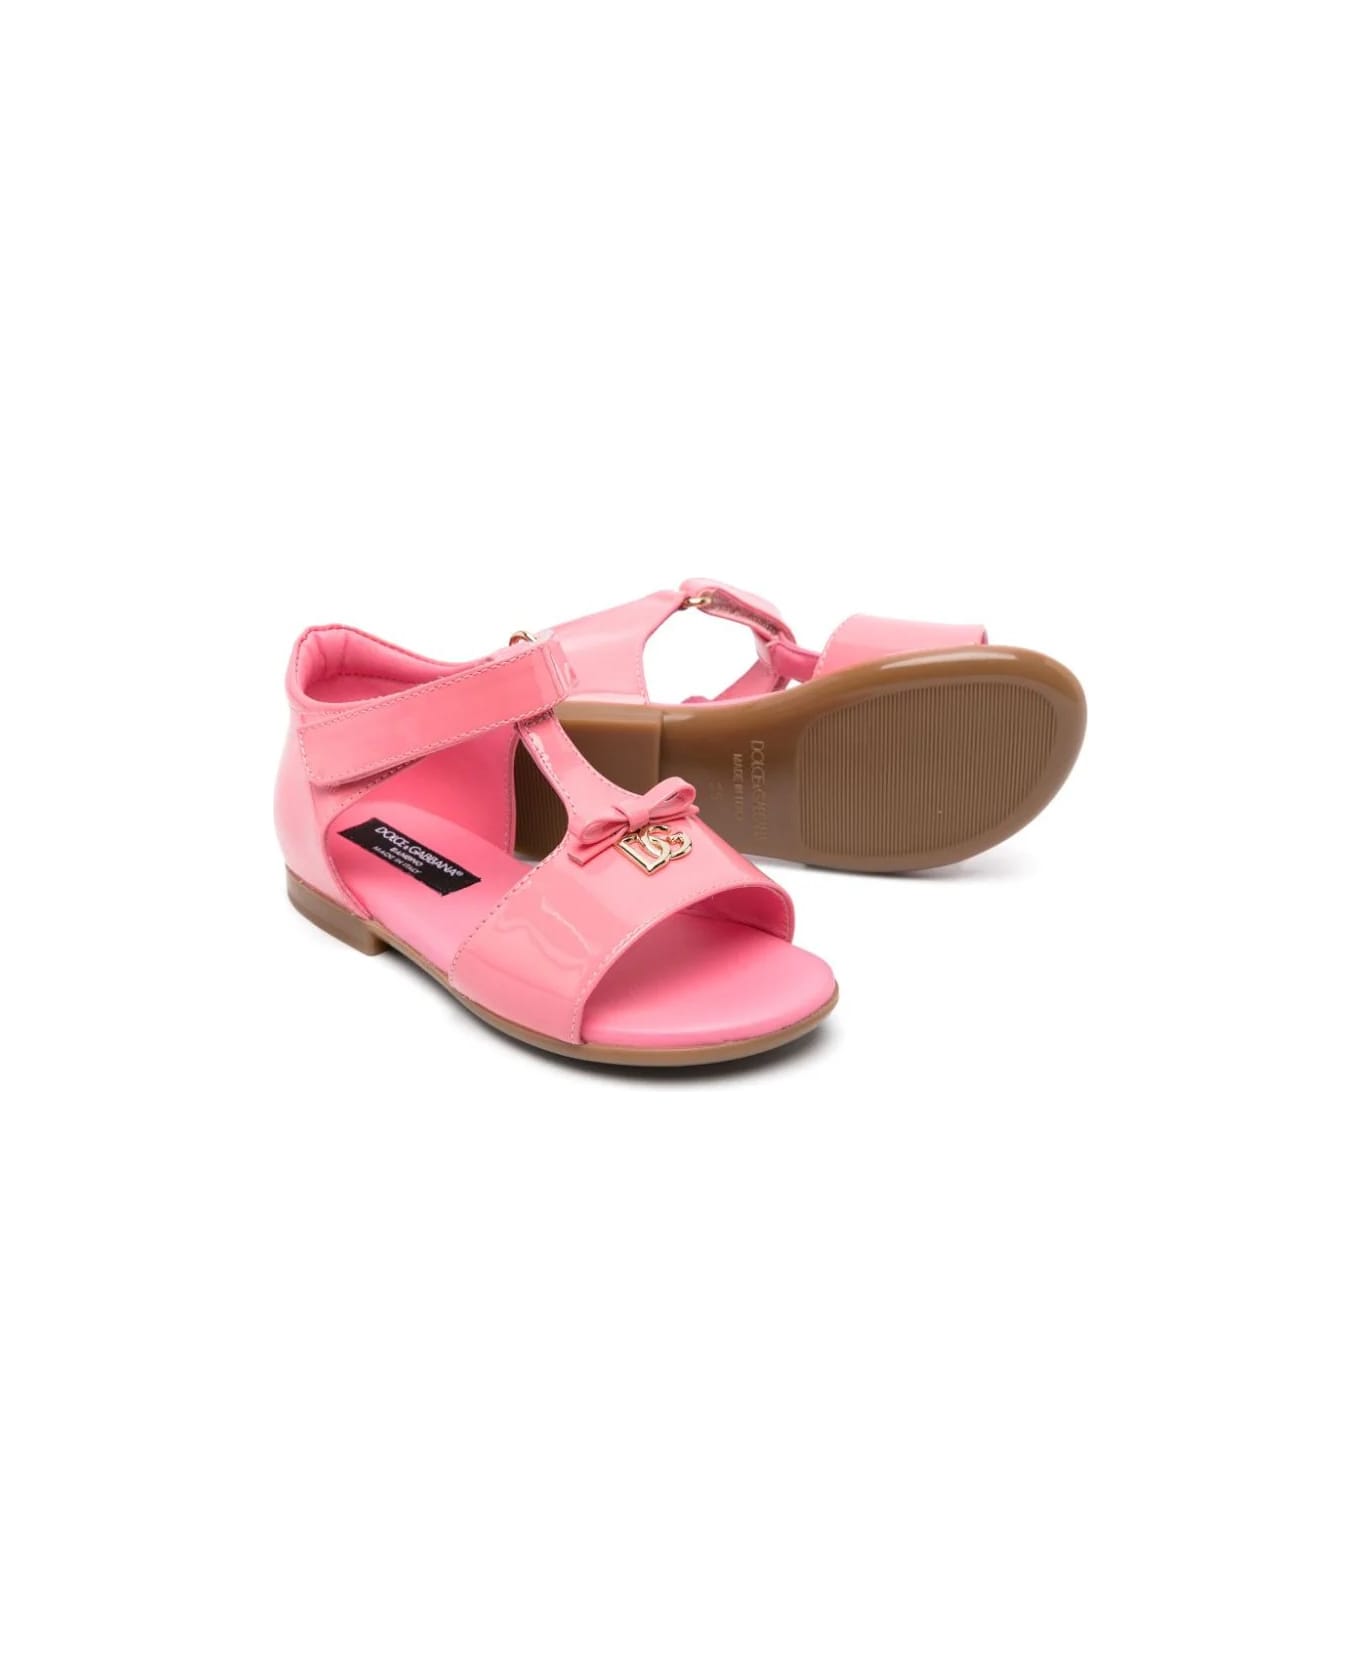 Dolce & Gabbana Blush Pink Patent Leather Sandals With Dg Logo - Pink シューズ